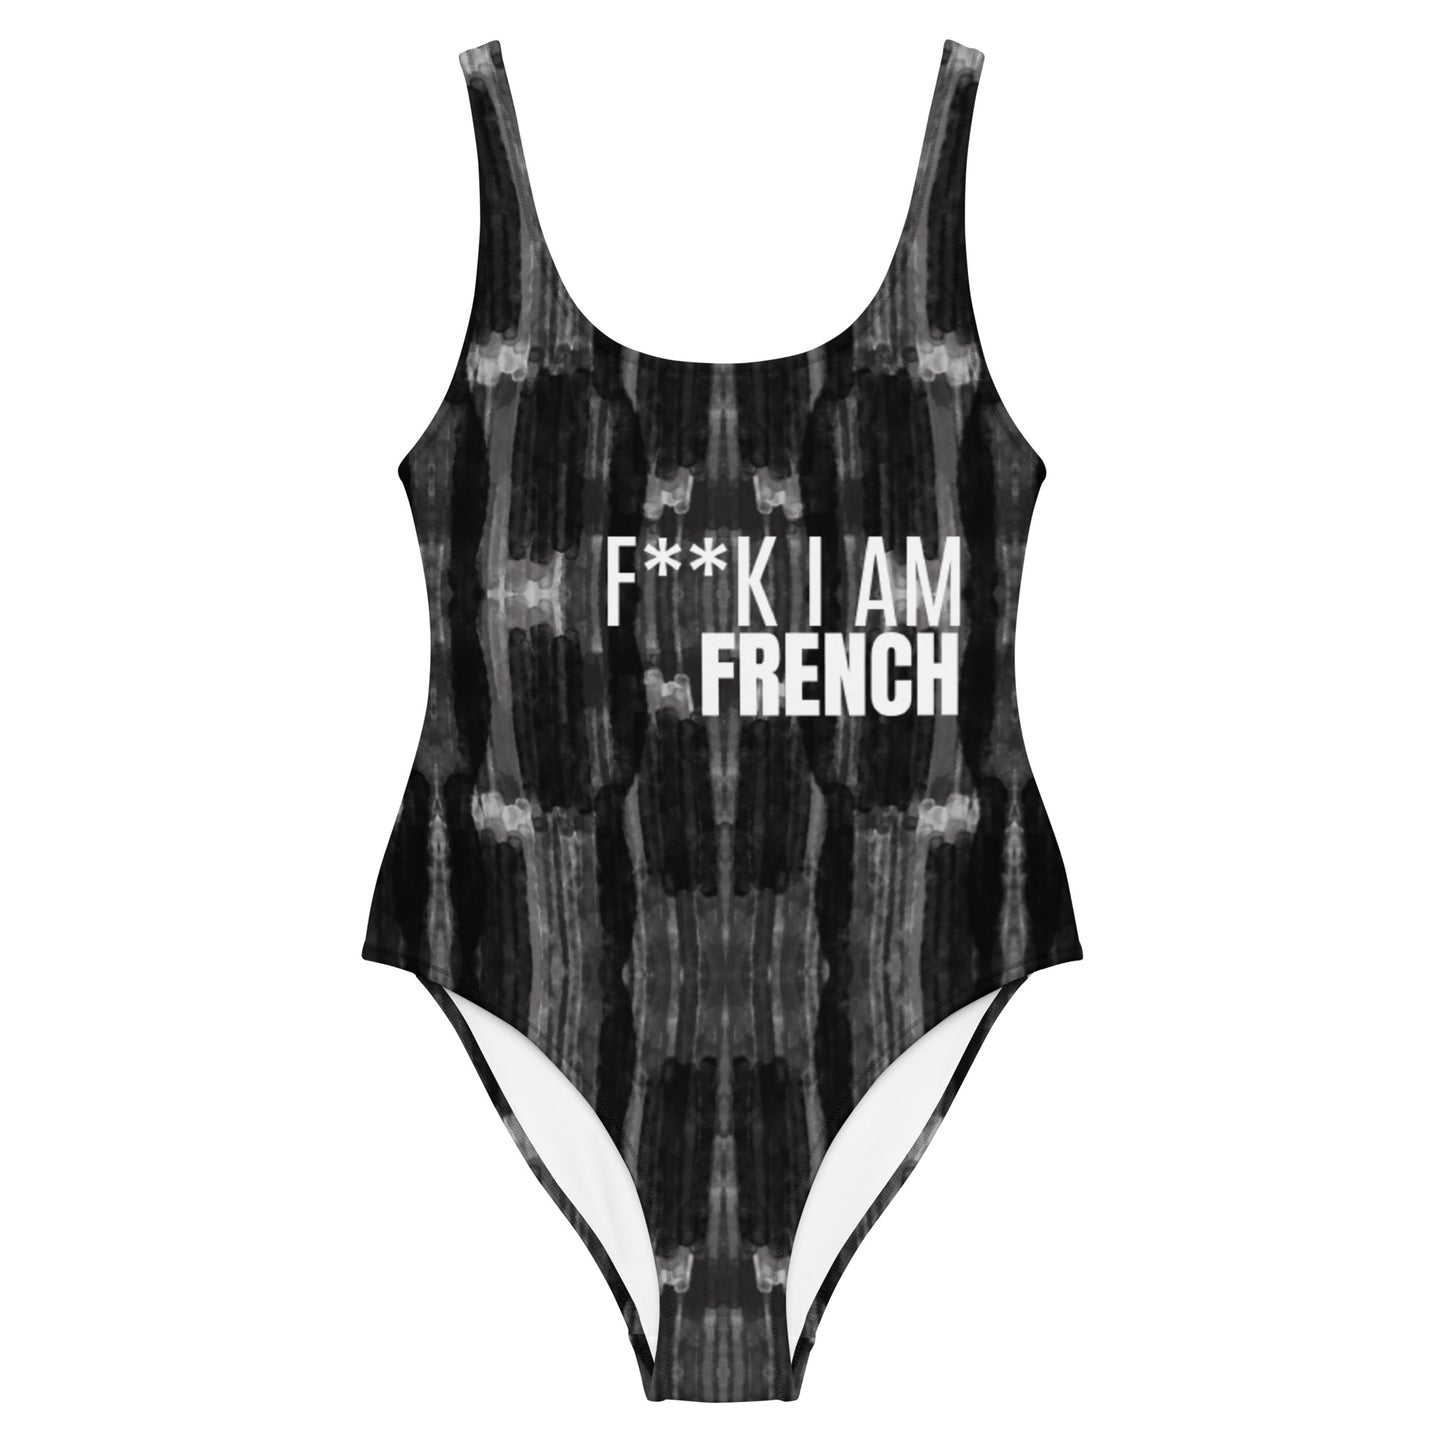 F**k I AM FRENCH - One Piece Swimsuit